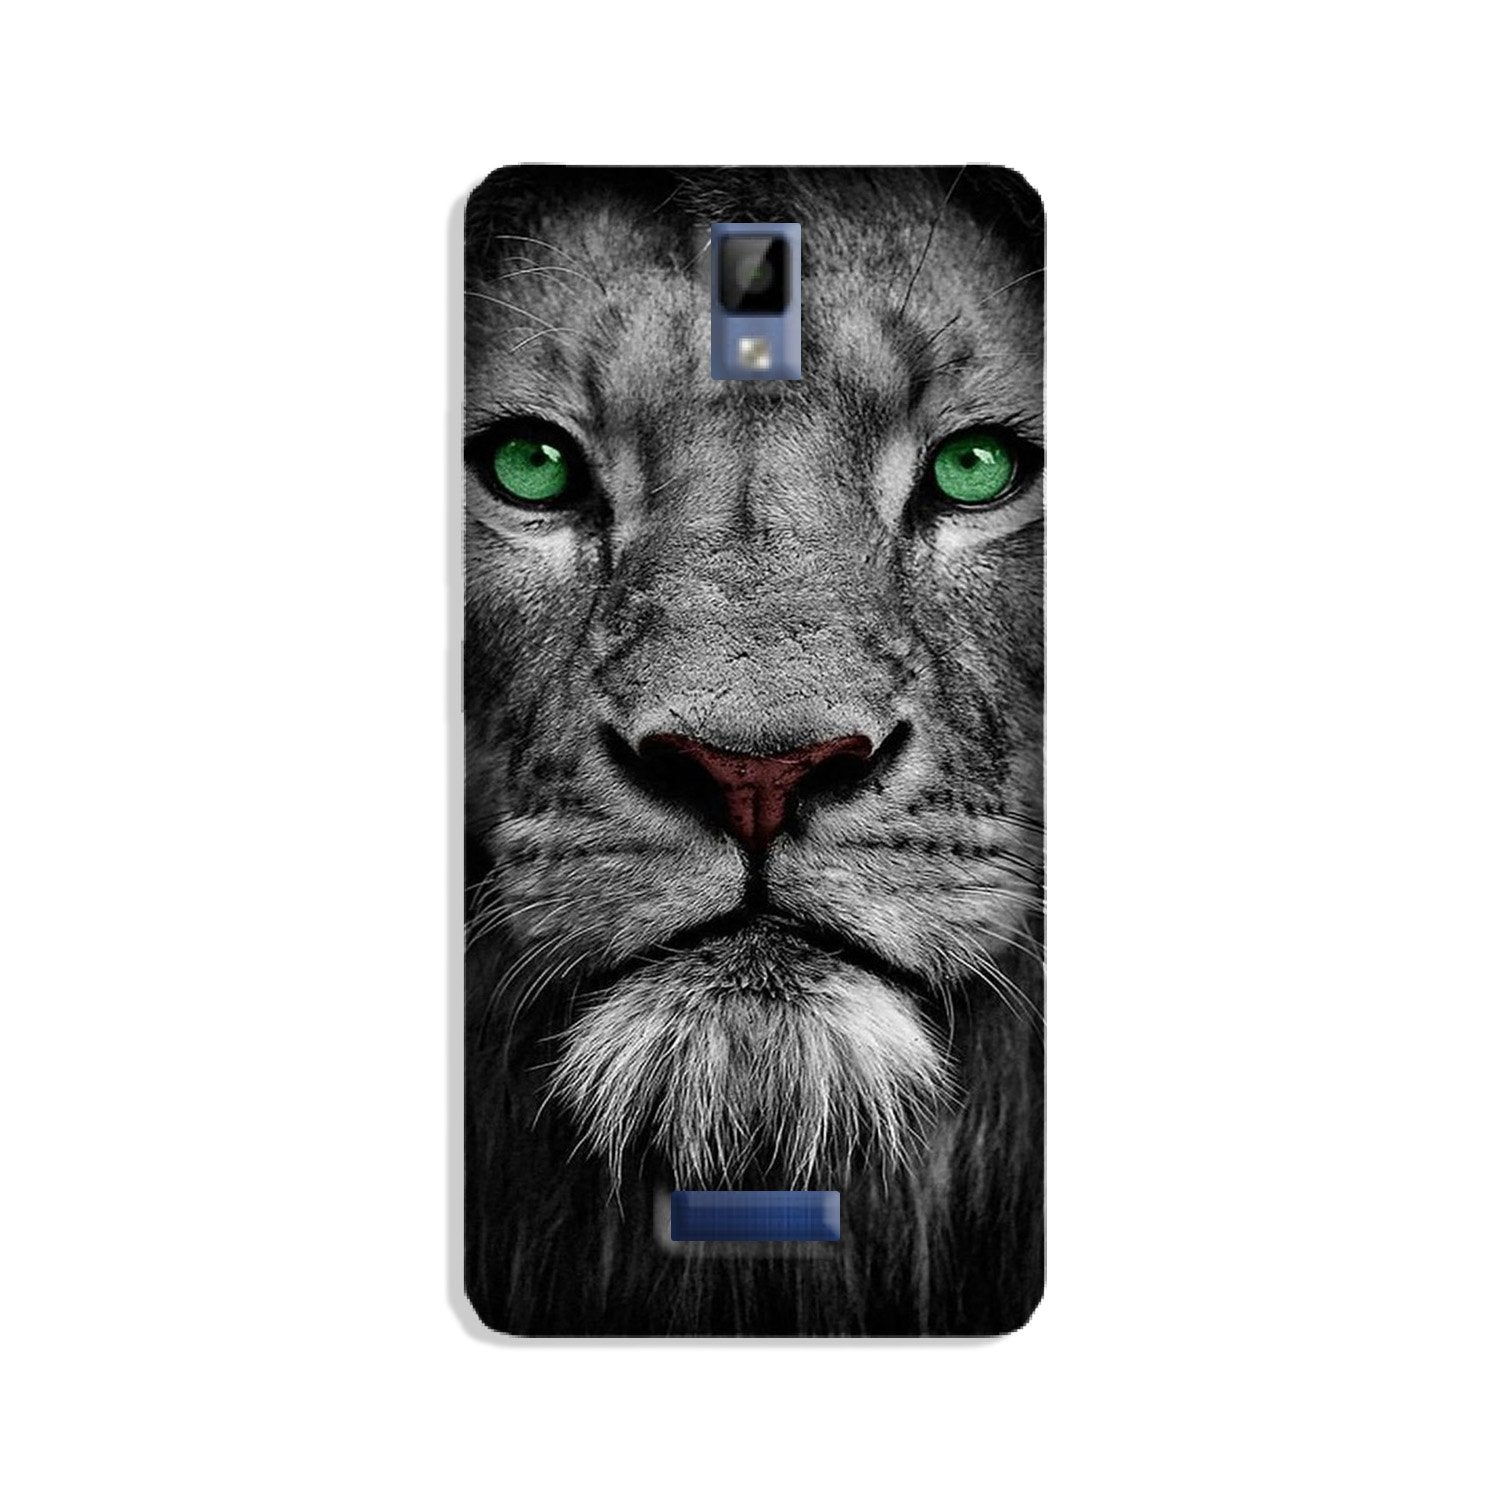 Lion Case for Gionee P7 (Design No. 272)